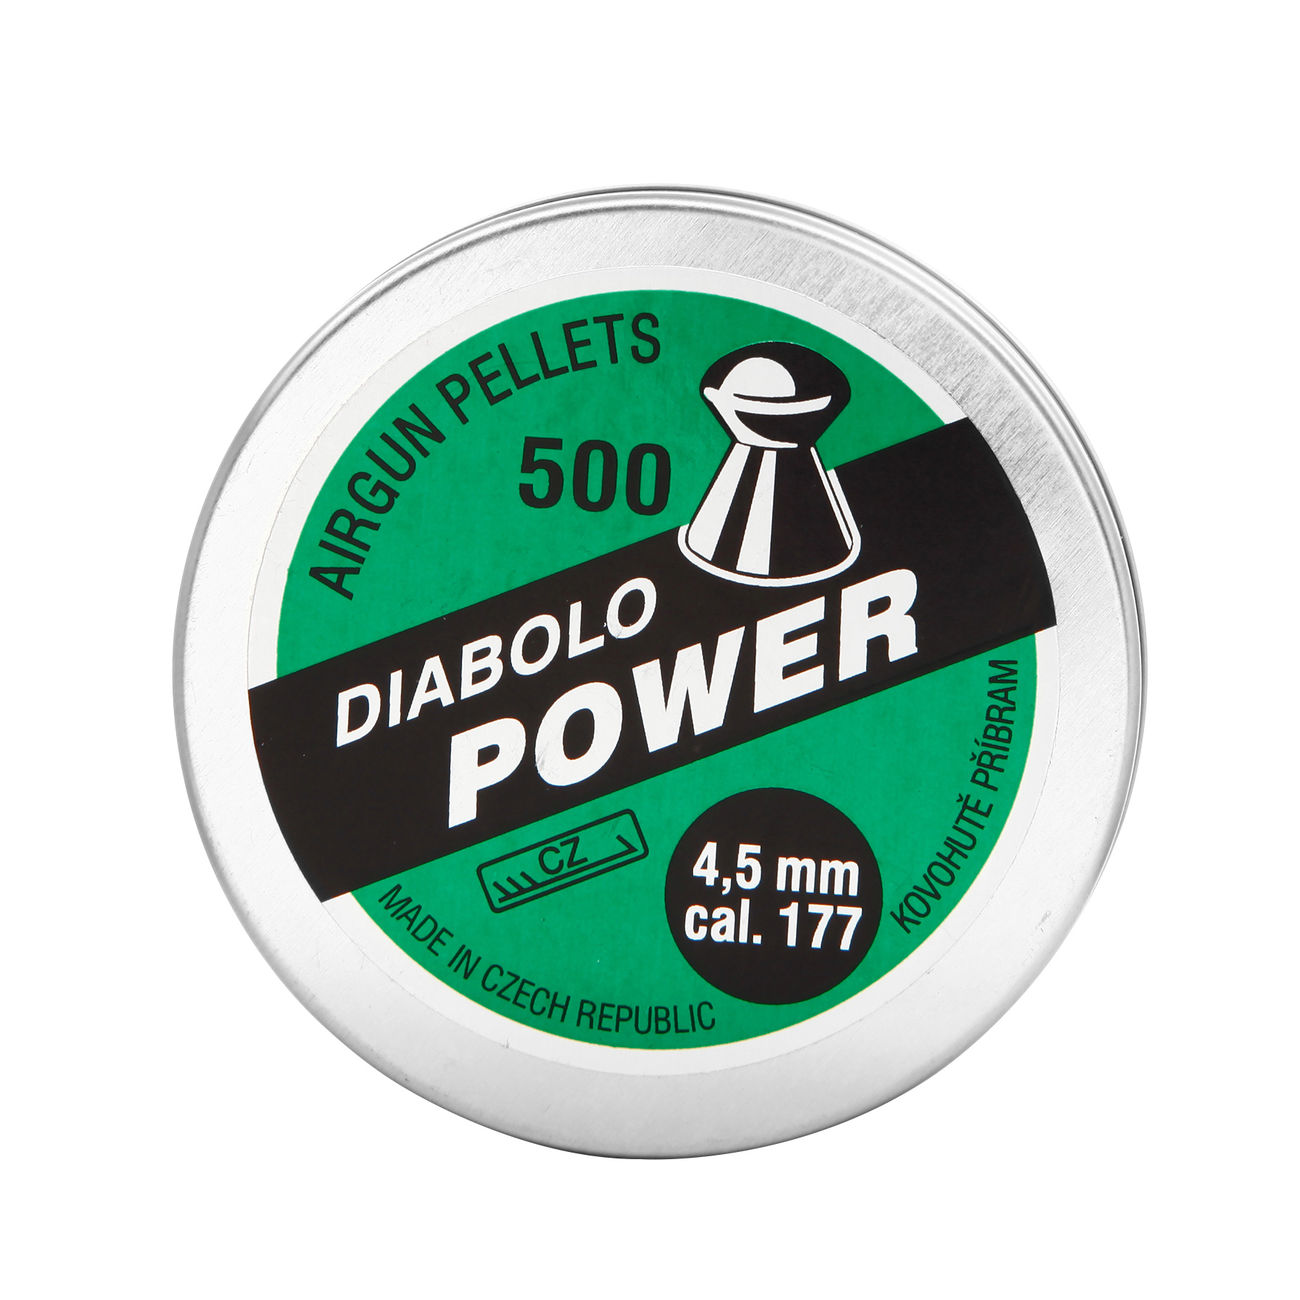 Kovohute Diabolo Power 4,5 mm 500 Stück Bild 1